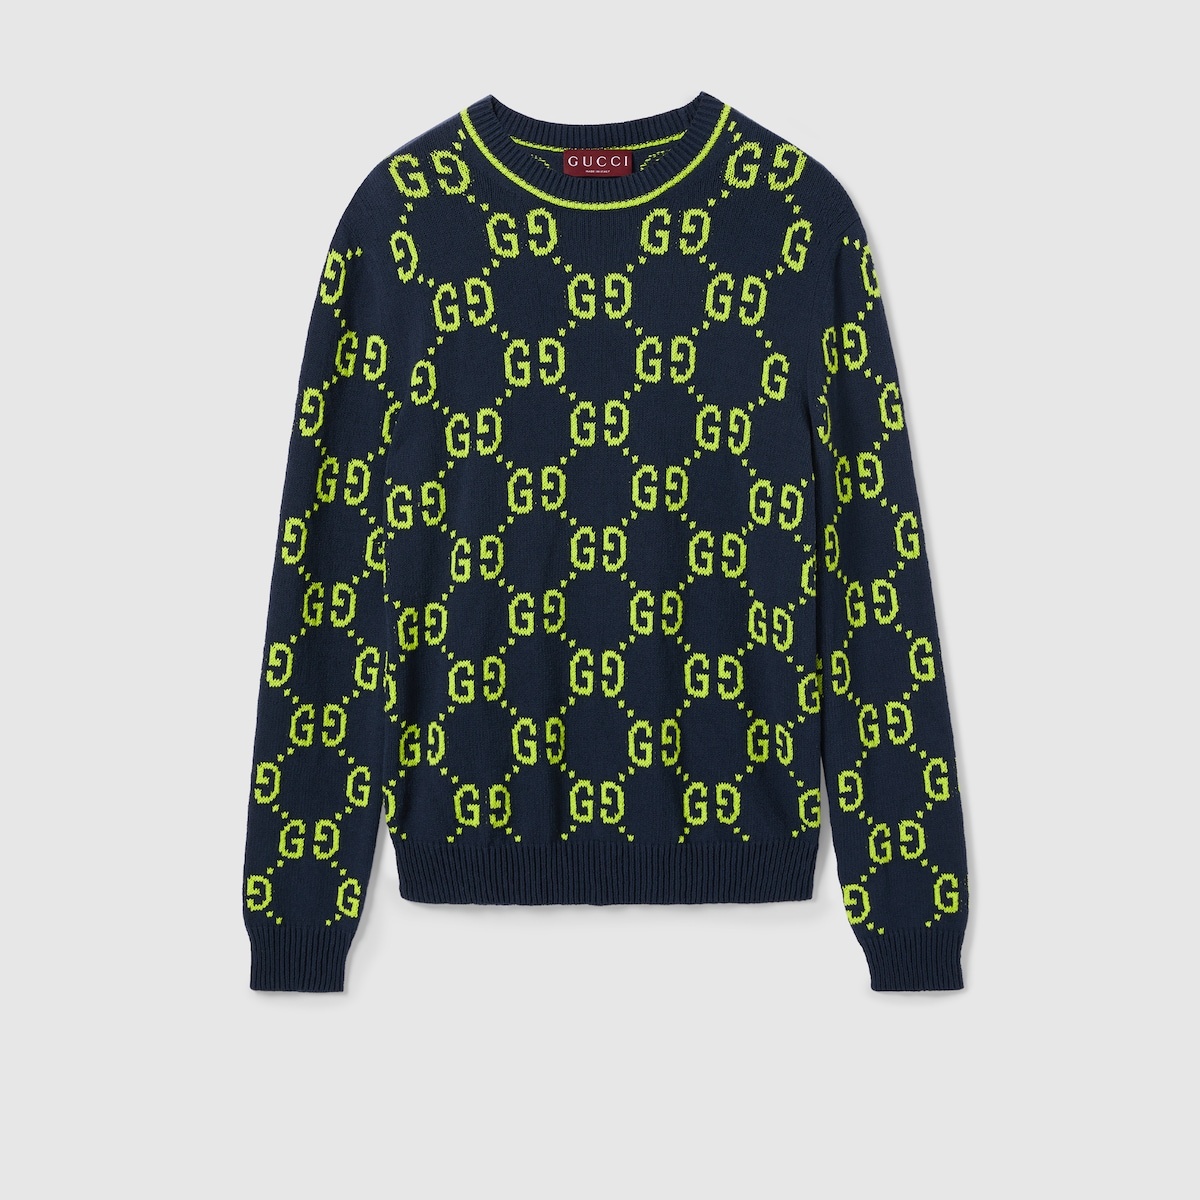 GG cotton jacquard crewneck sweater - 1